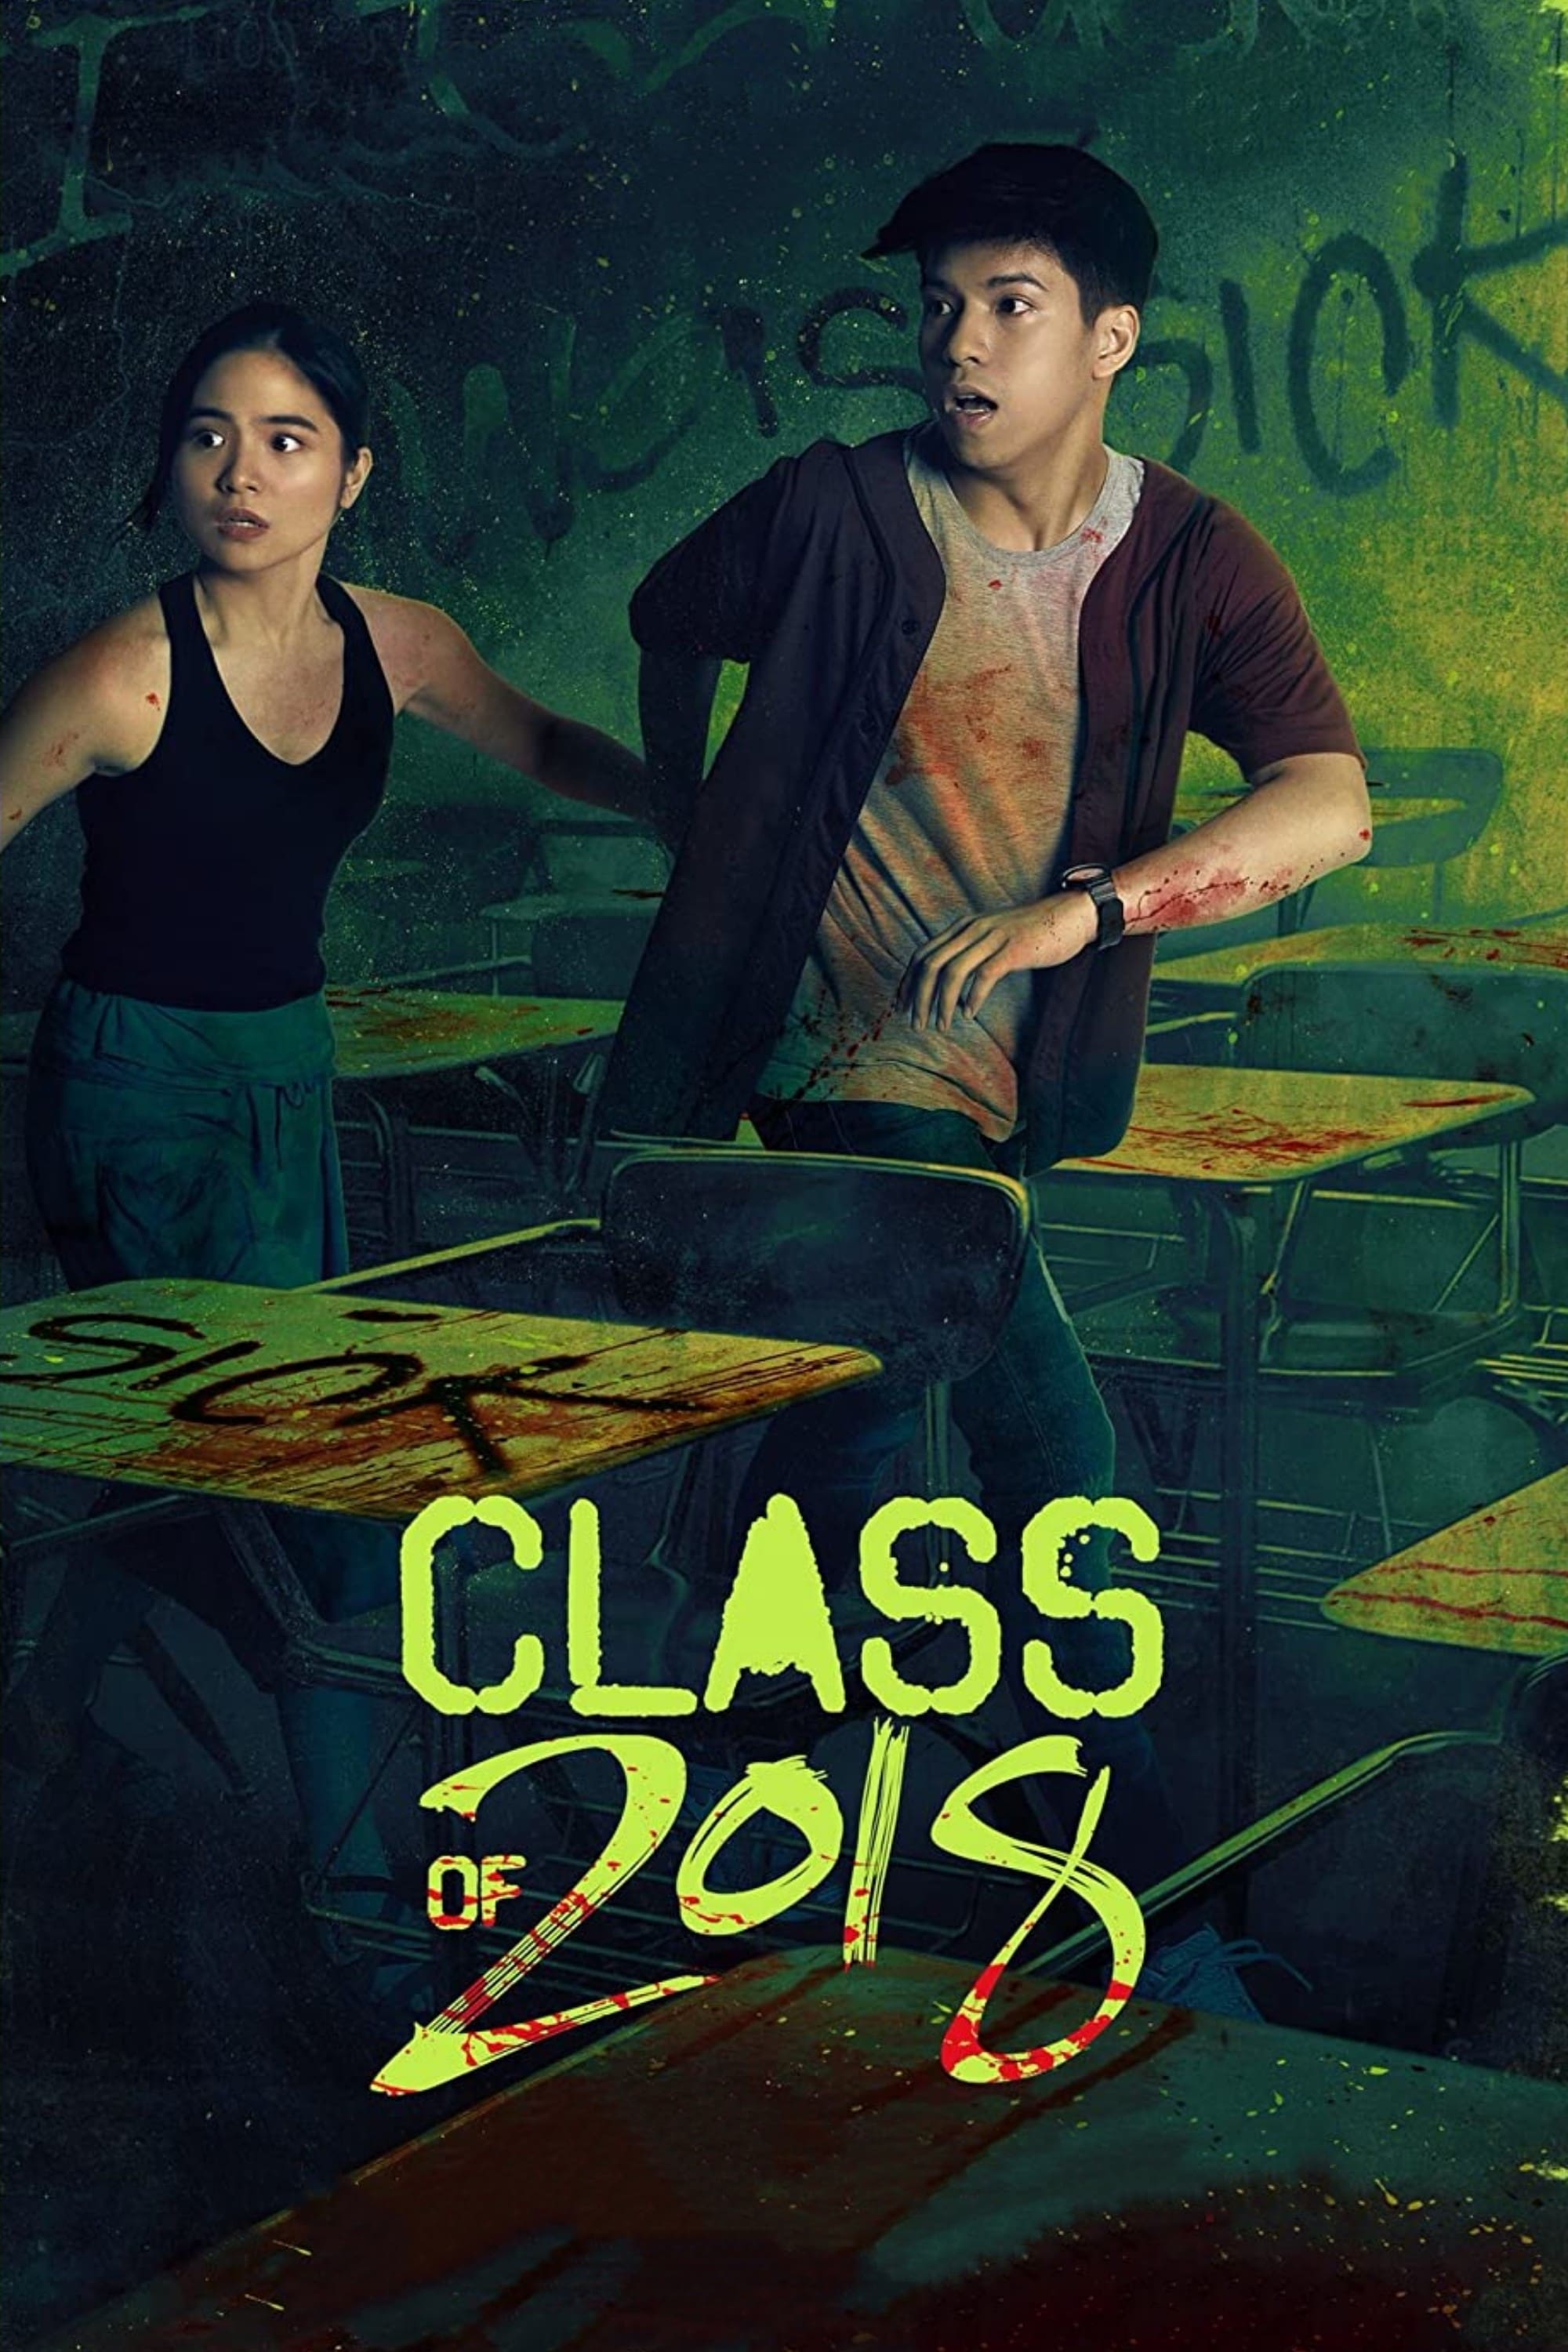 Class of 2018 (2018)